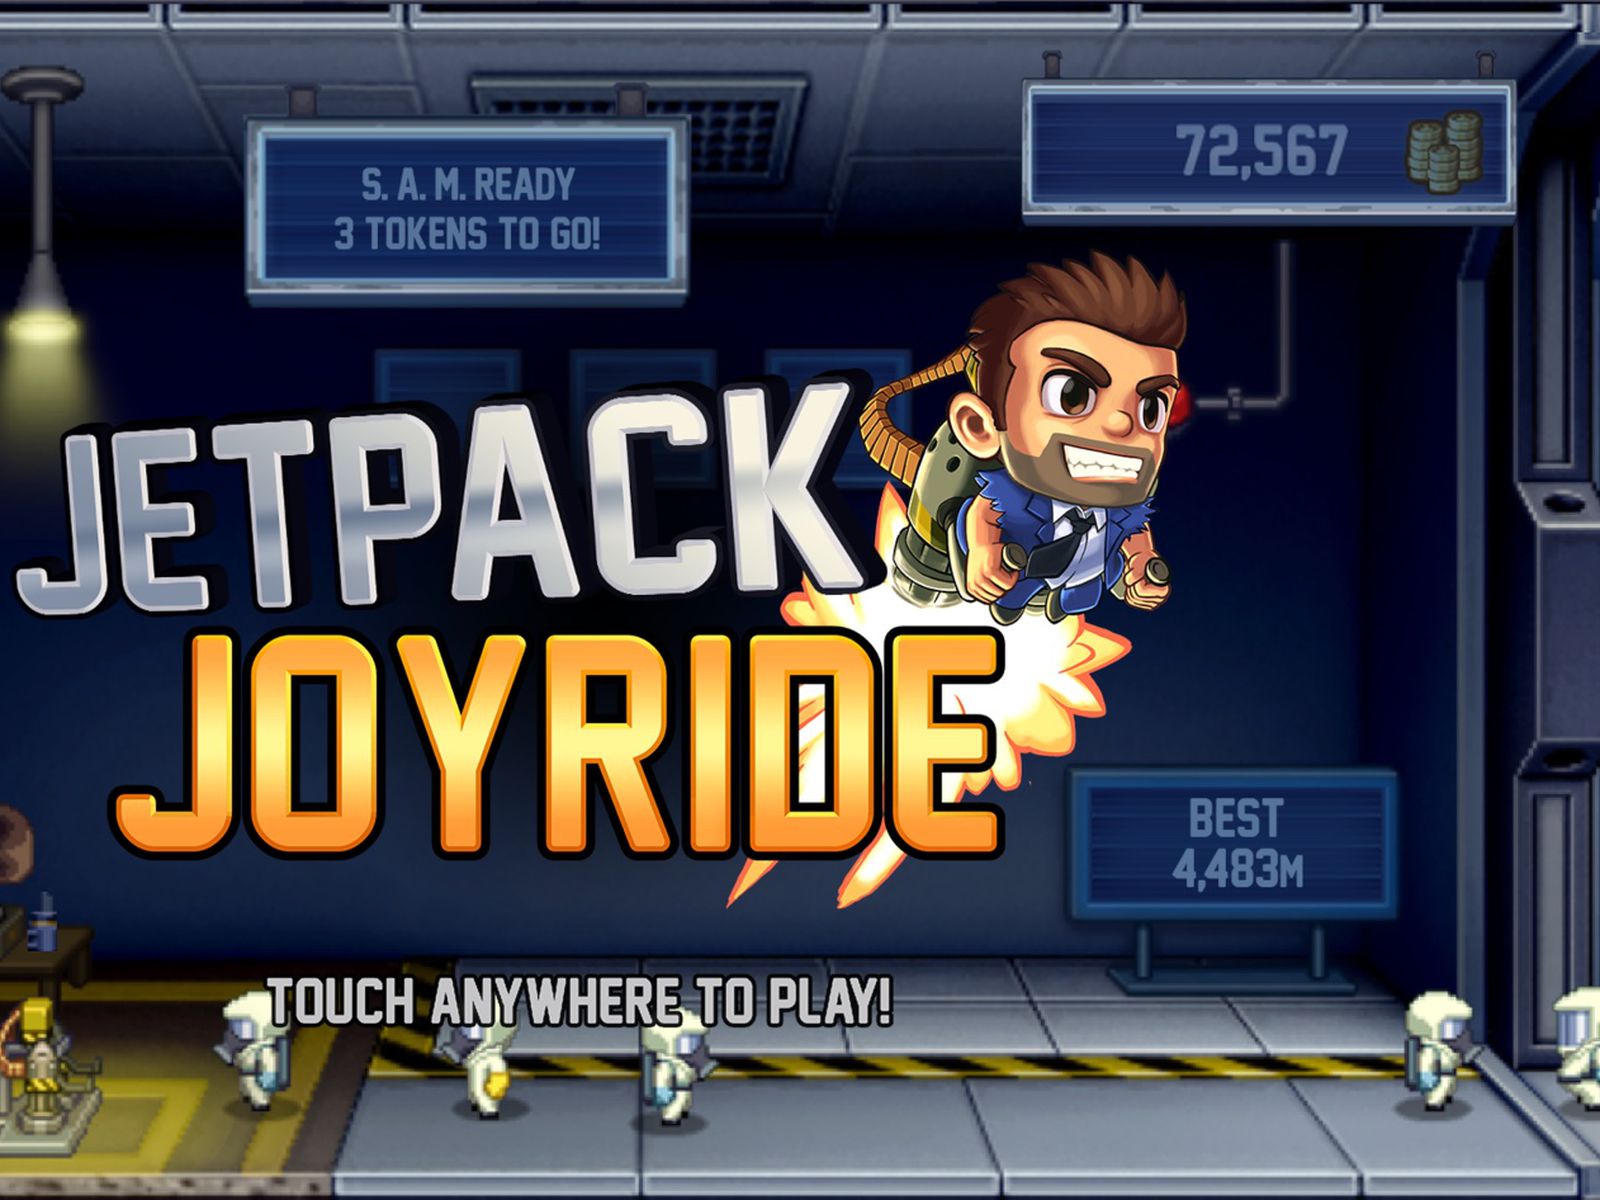 App Store Classic 'Jetpack Joyride' Launches on Apple Arcade - MacRumors